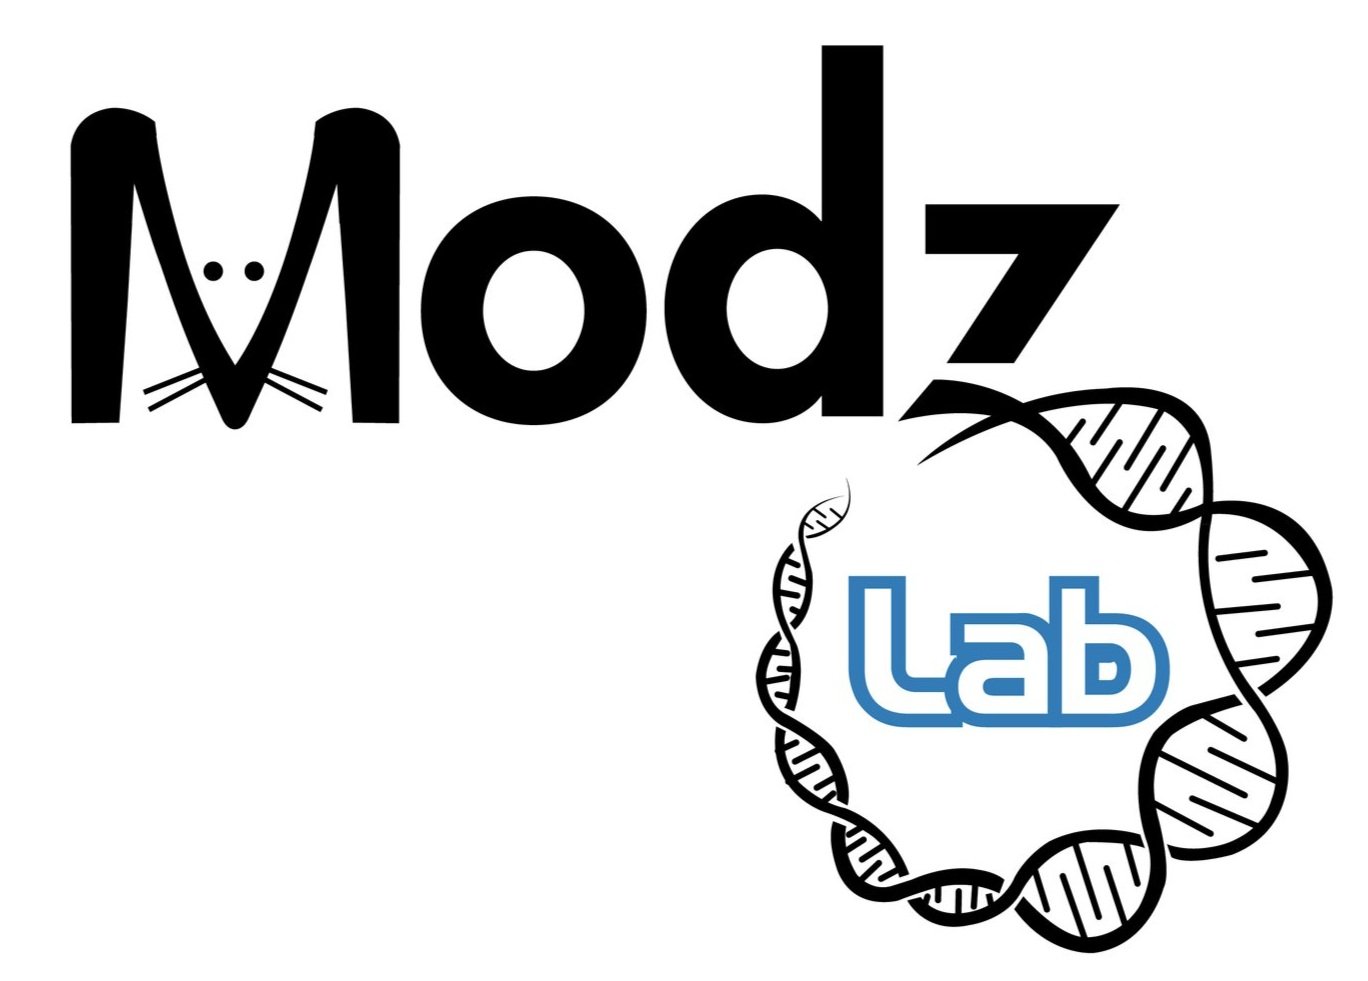 The Modz Lab